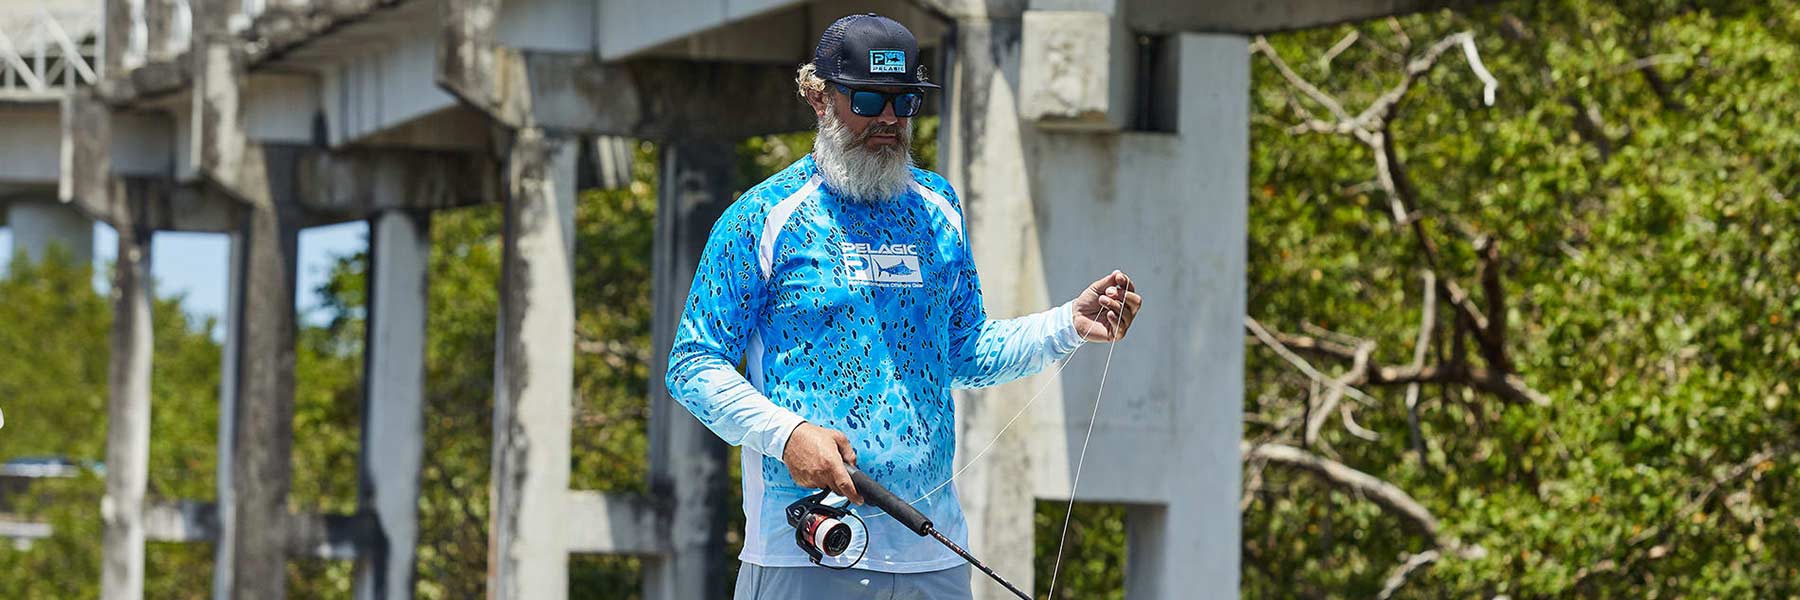 Performance Fishing Clothing & Sunglasses